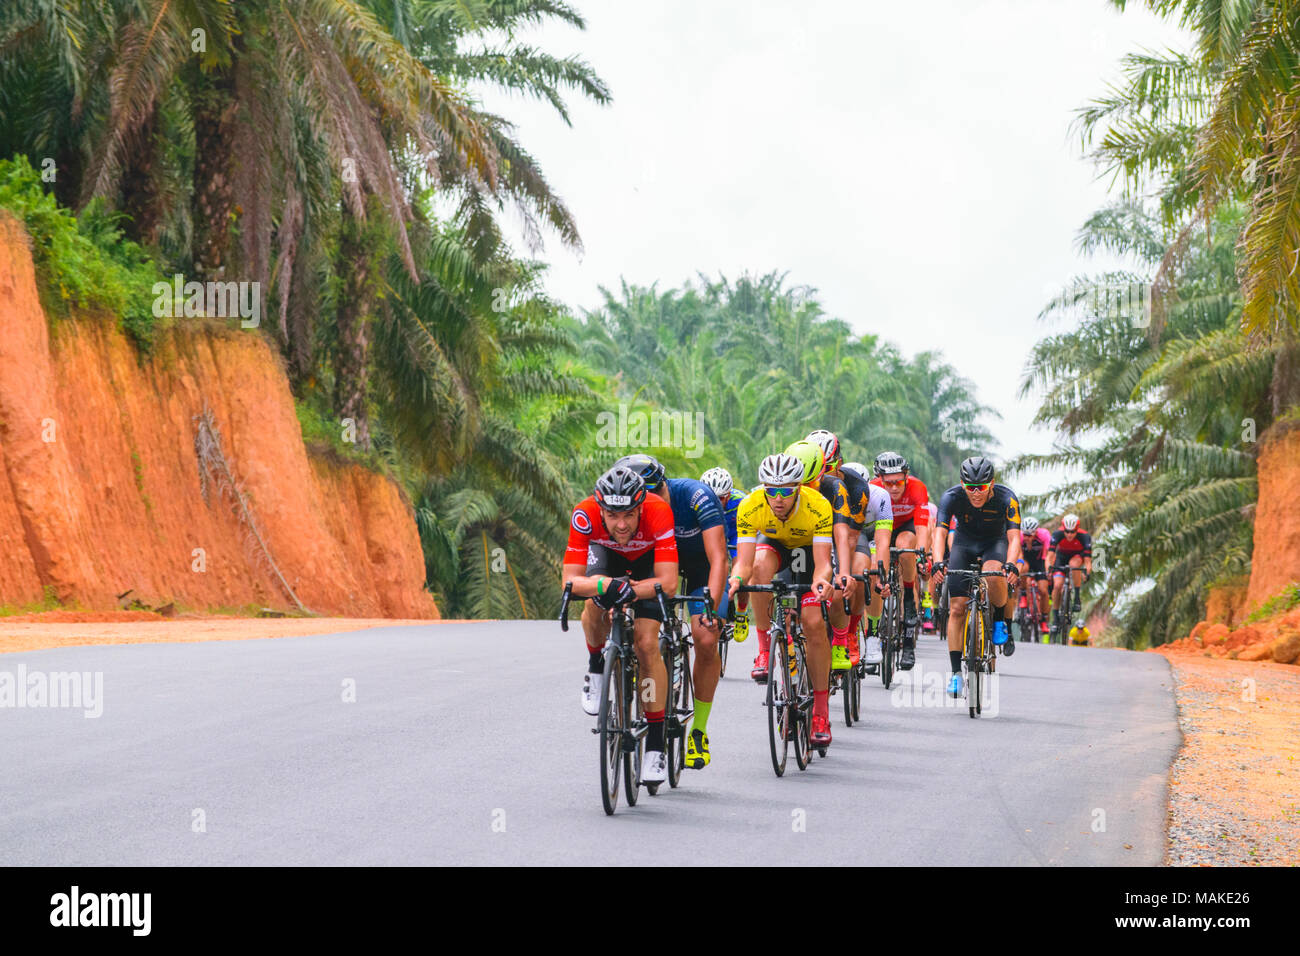 März 24, 2018 - Radfahrer Teilnehmer Tour de Bintan 2018 (144 km) Fahrt über die Plantagen und Toapaya Galang batang, Bintan Island - Indonesien Stockfoto